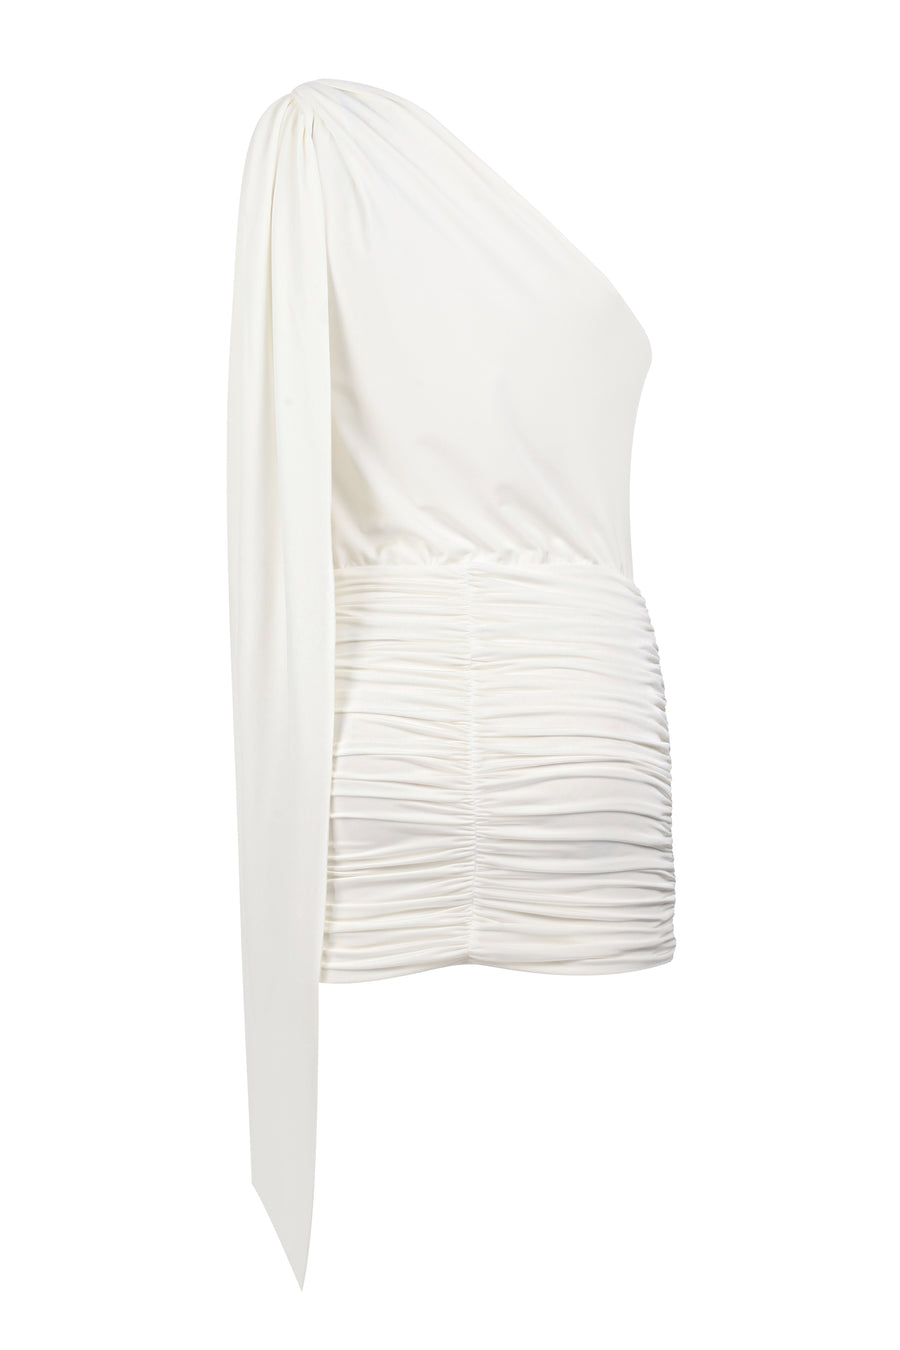 The Rylee White Mini Dress